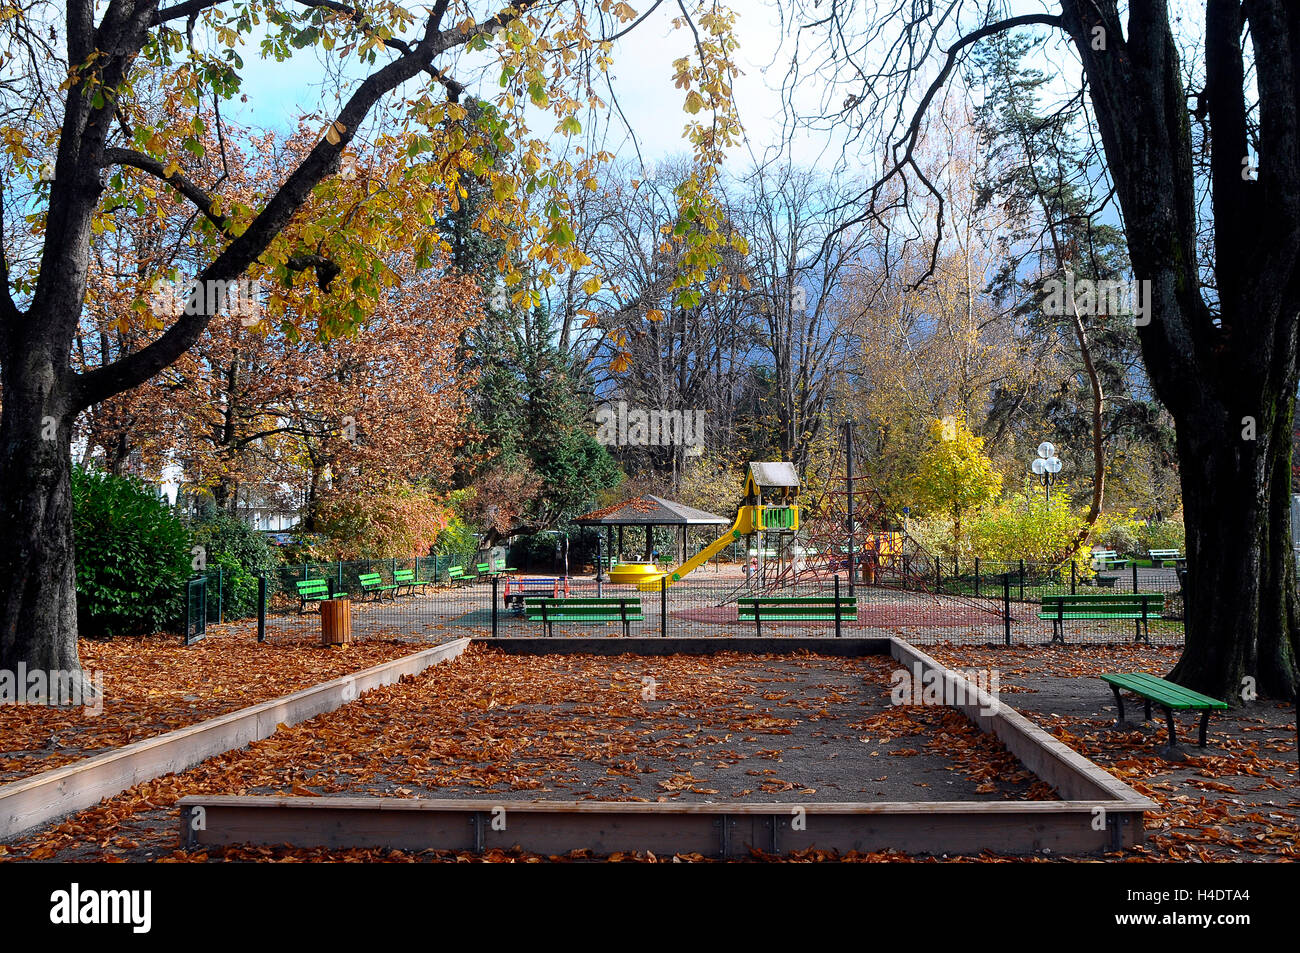 Deserted children's playground at autumn season Stock Photo